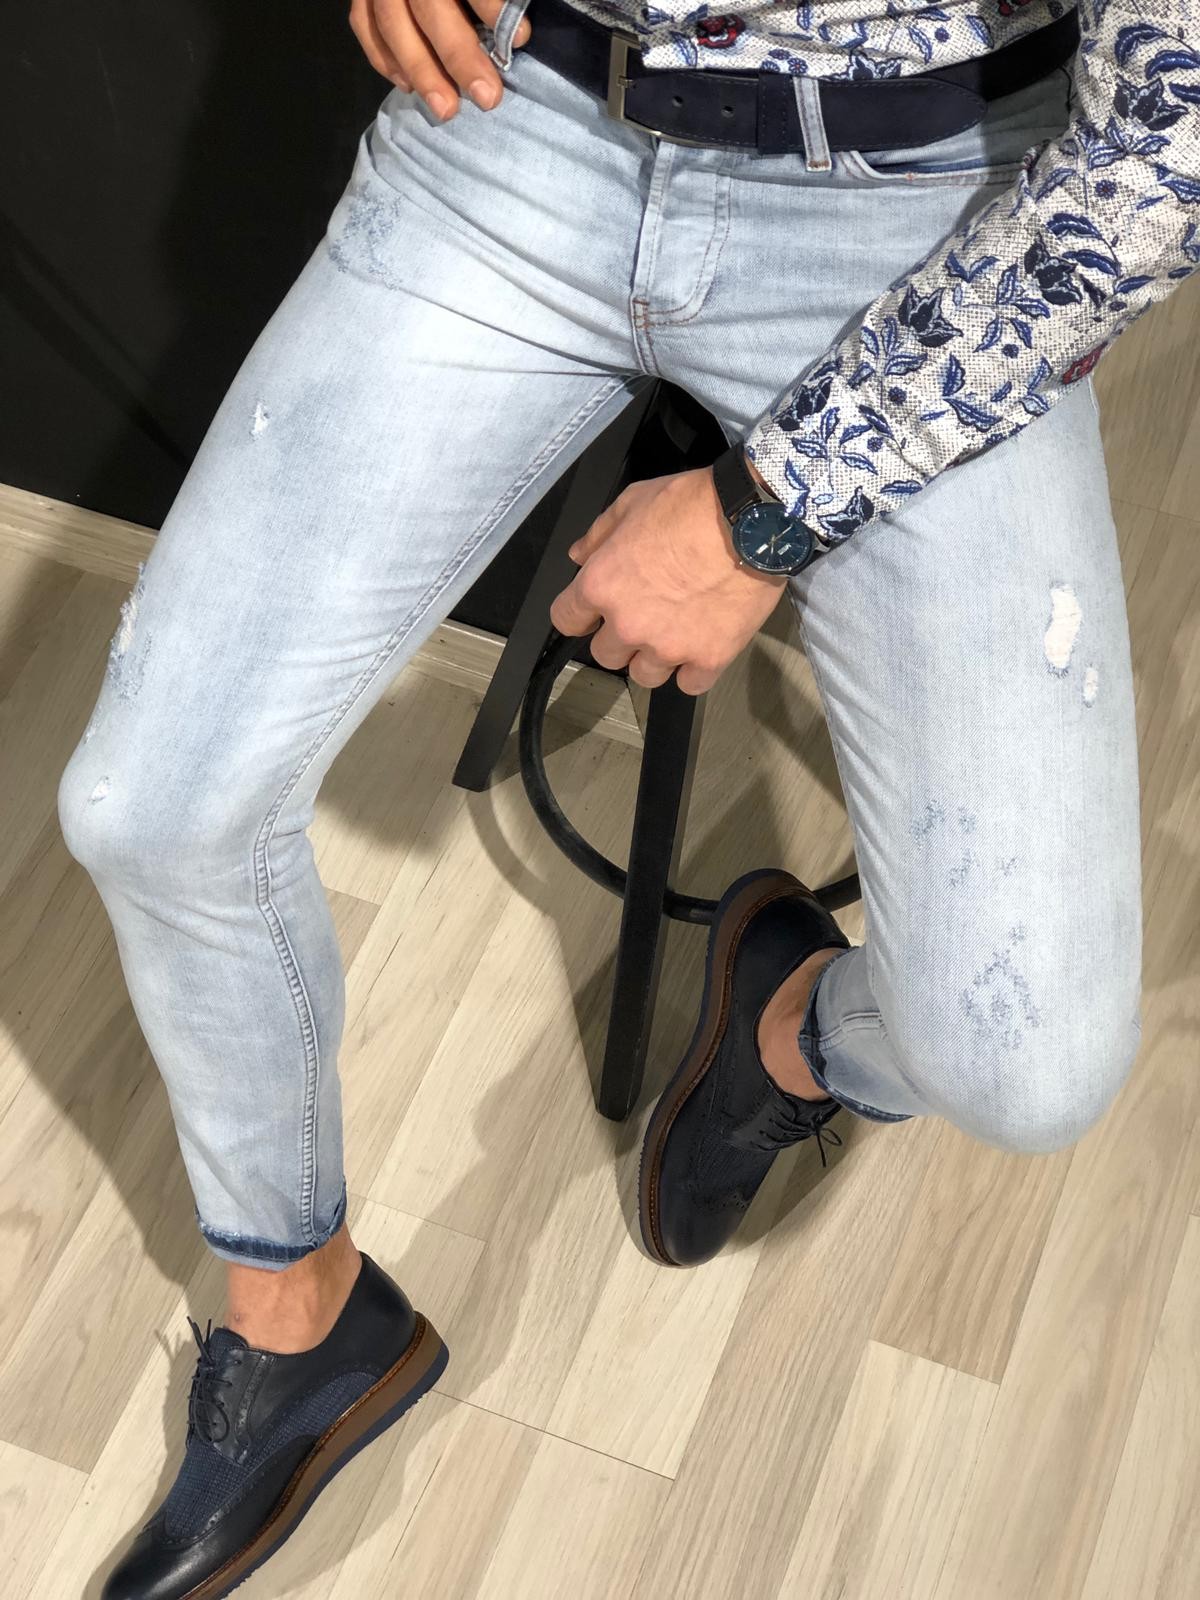 Victorious Men's Slim Fit Colored Denim Jeans Stretch Pants GS21 - FREE  SHIP | eBay